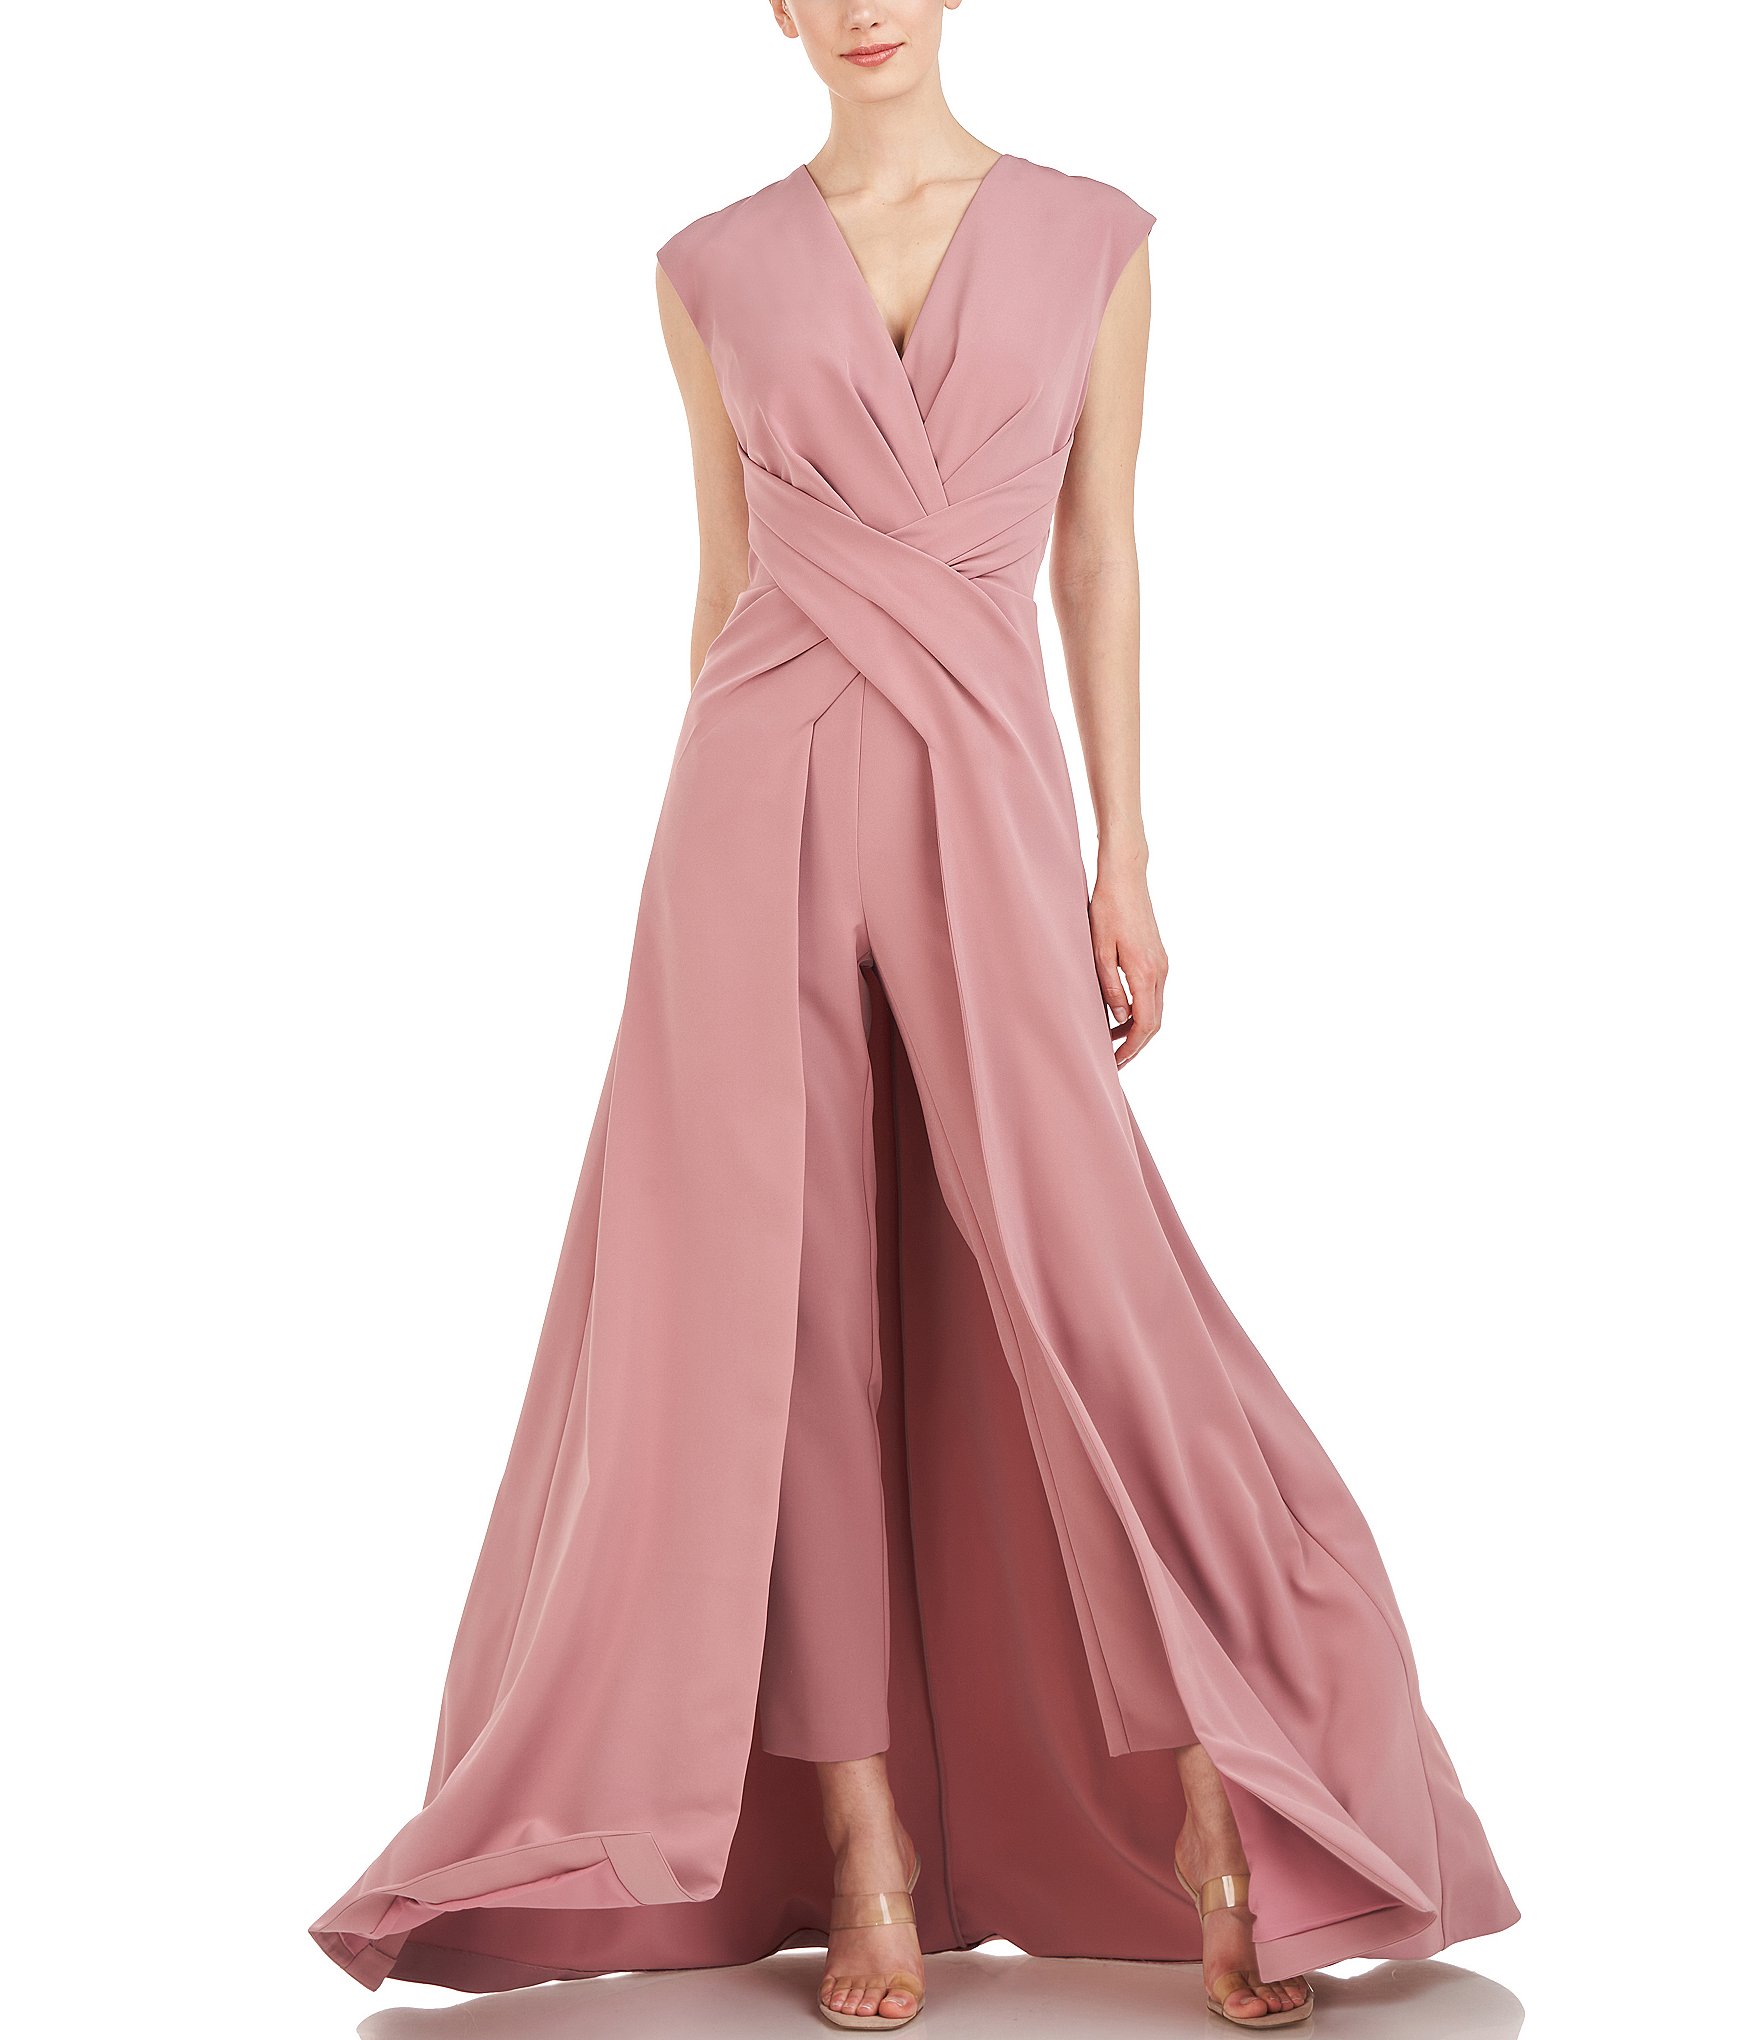 Gianni Bini Women's Formal Dresses & Evening Gowns | Dillard's